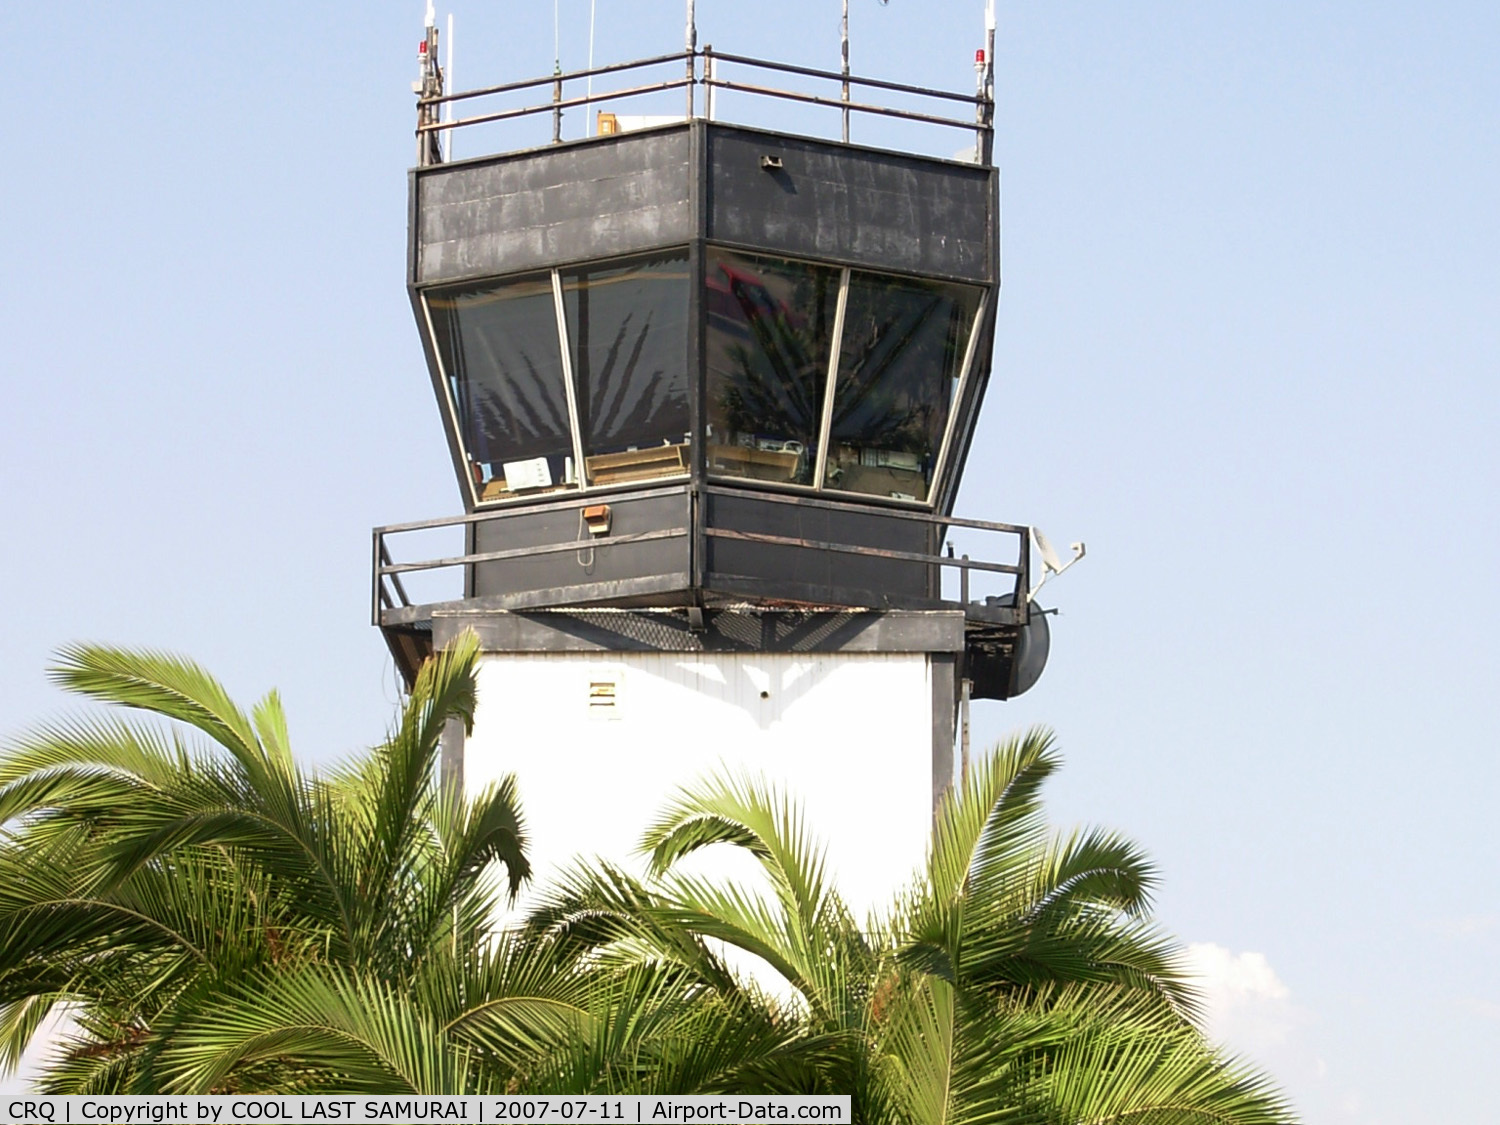 Mc Clellan-palomar Airport (CRQ) - Mc Clellan-Palomar Airport Tower